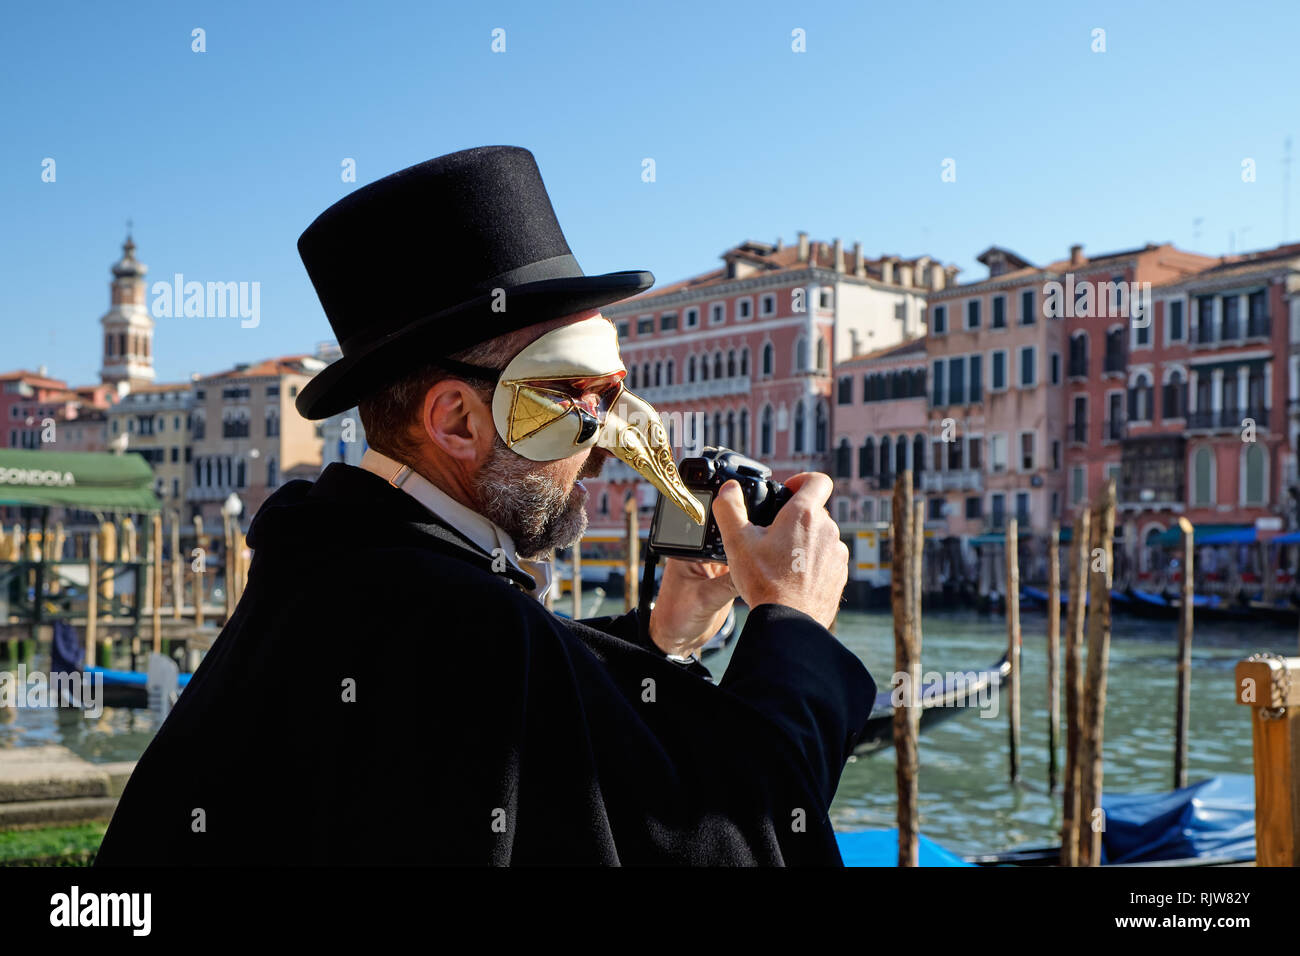 Pantalone venetian mask hi-res stock photography and images - Alamy